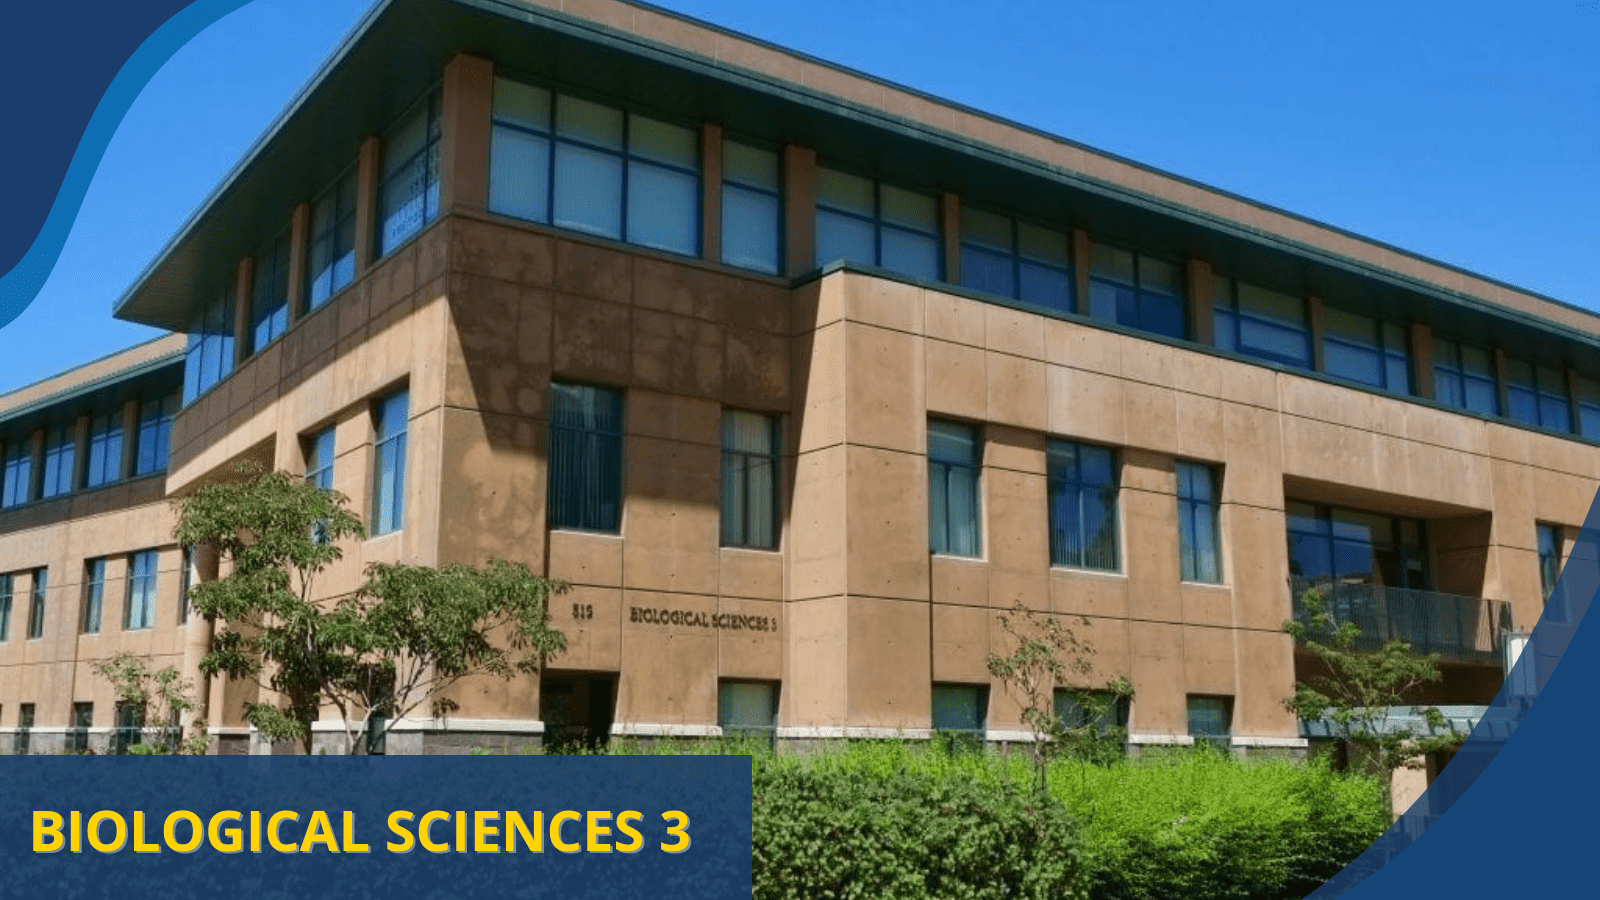 Biological Sciences 3 building